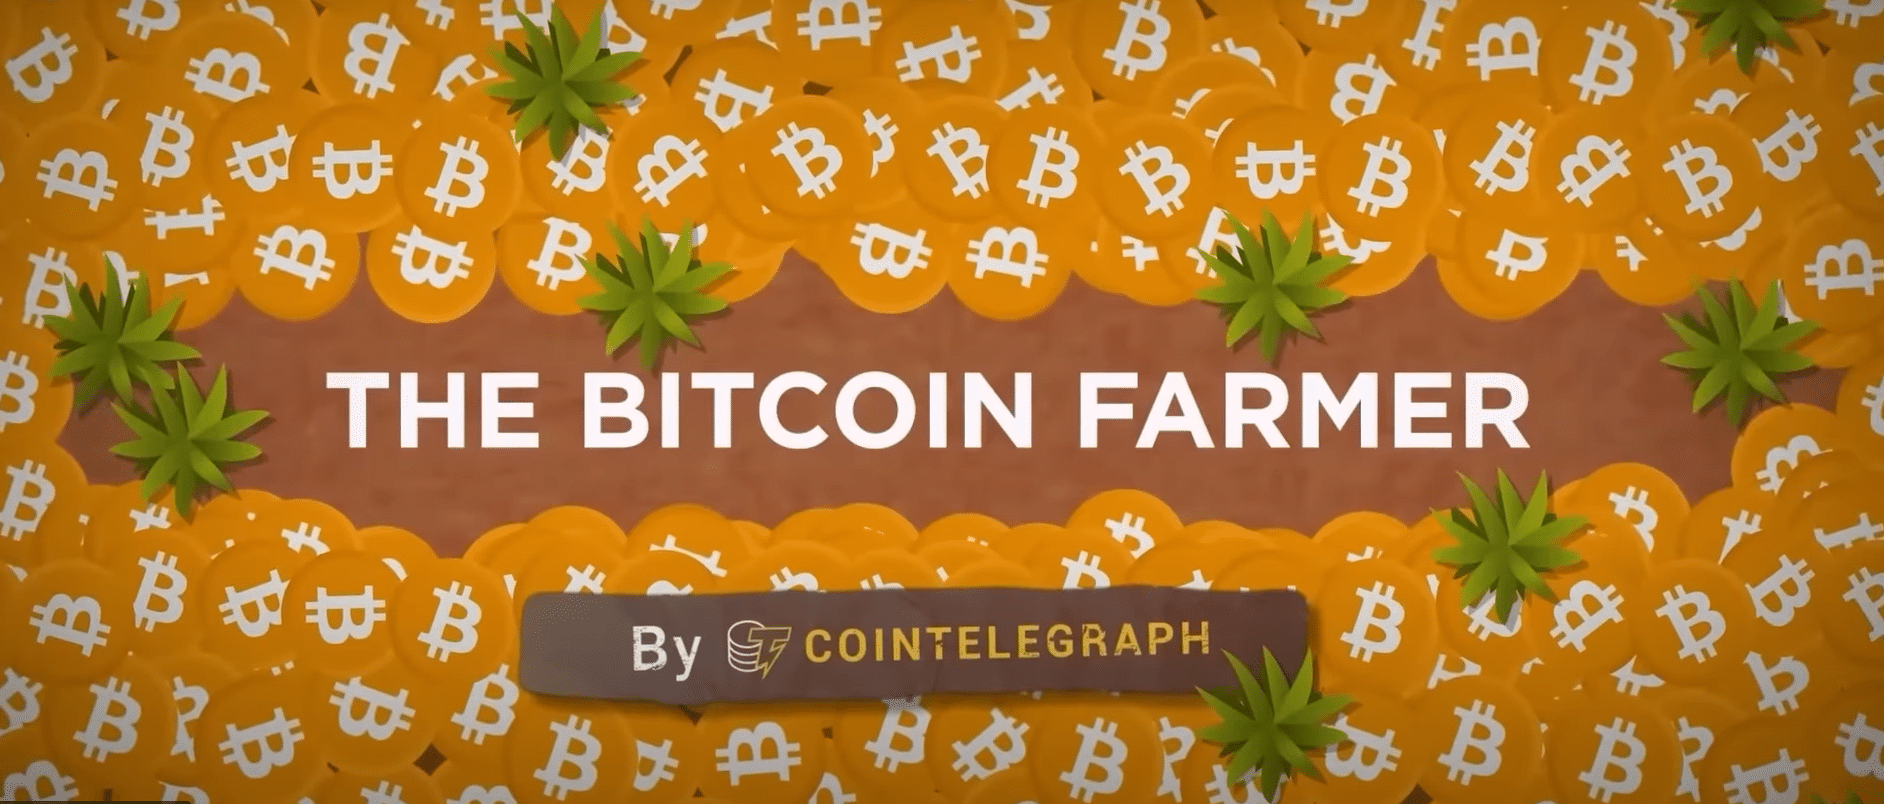 bitcoin farmer Tom campbell